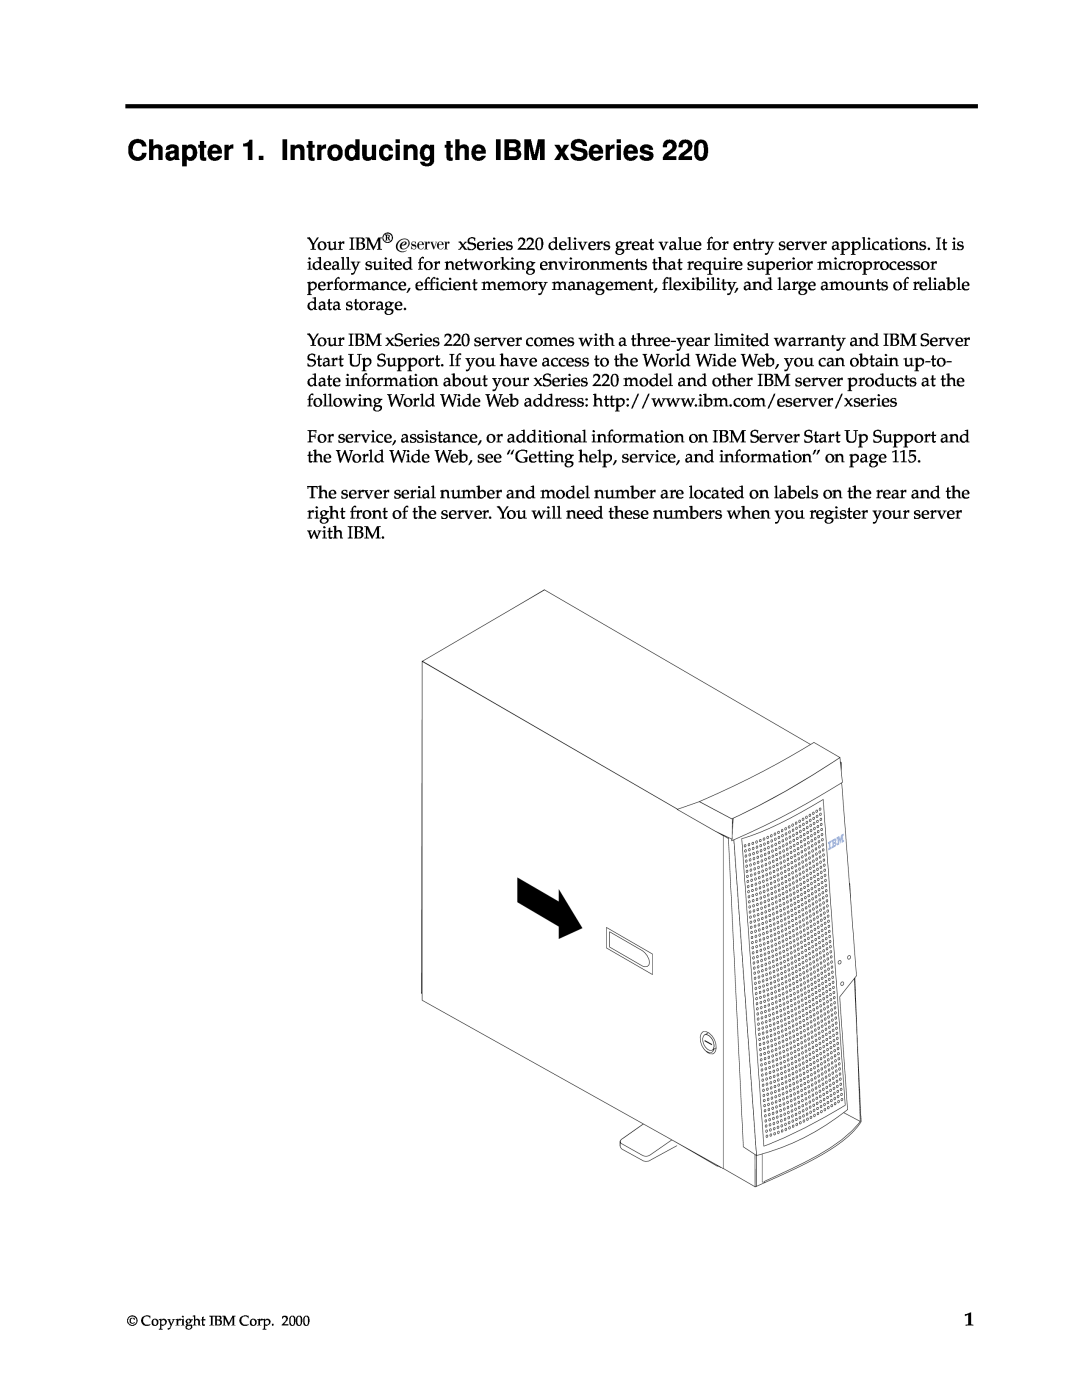 IBM 220 manual Introducing the IBM xSeries 